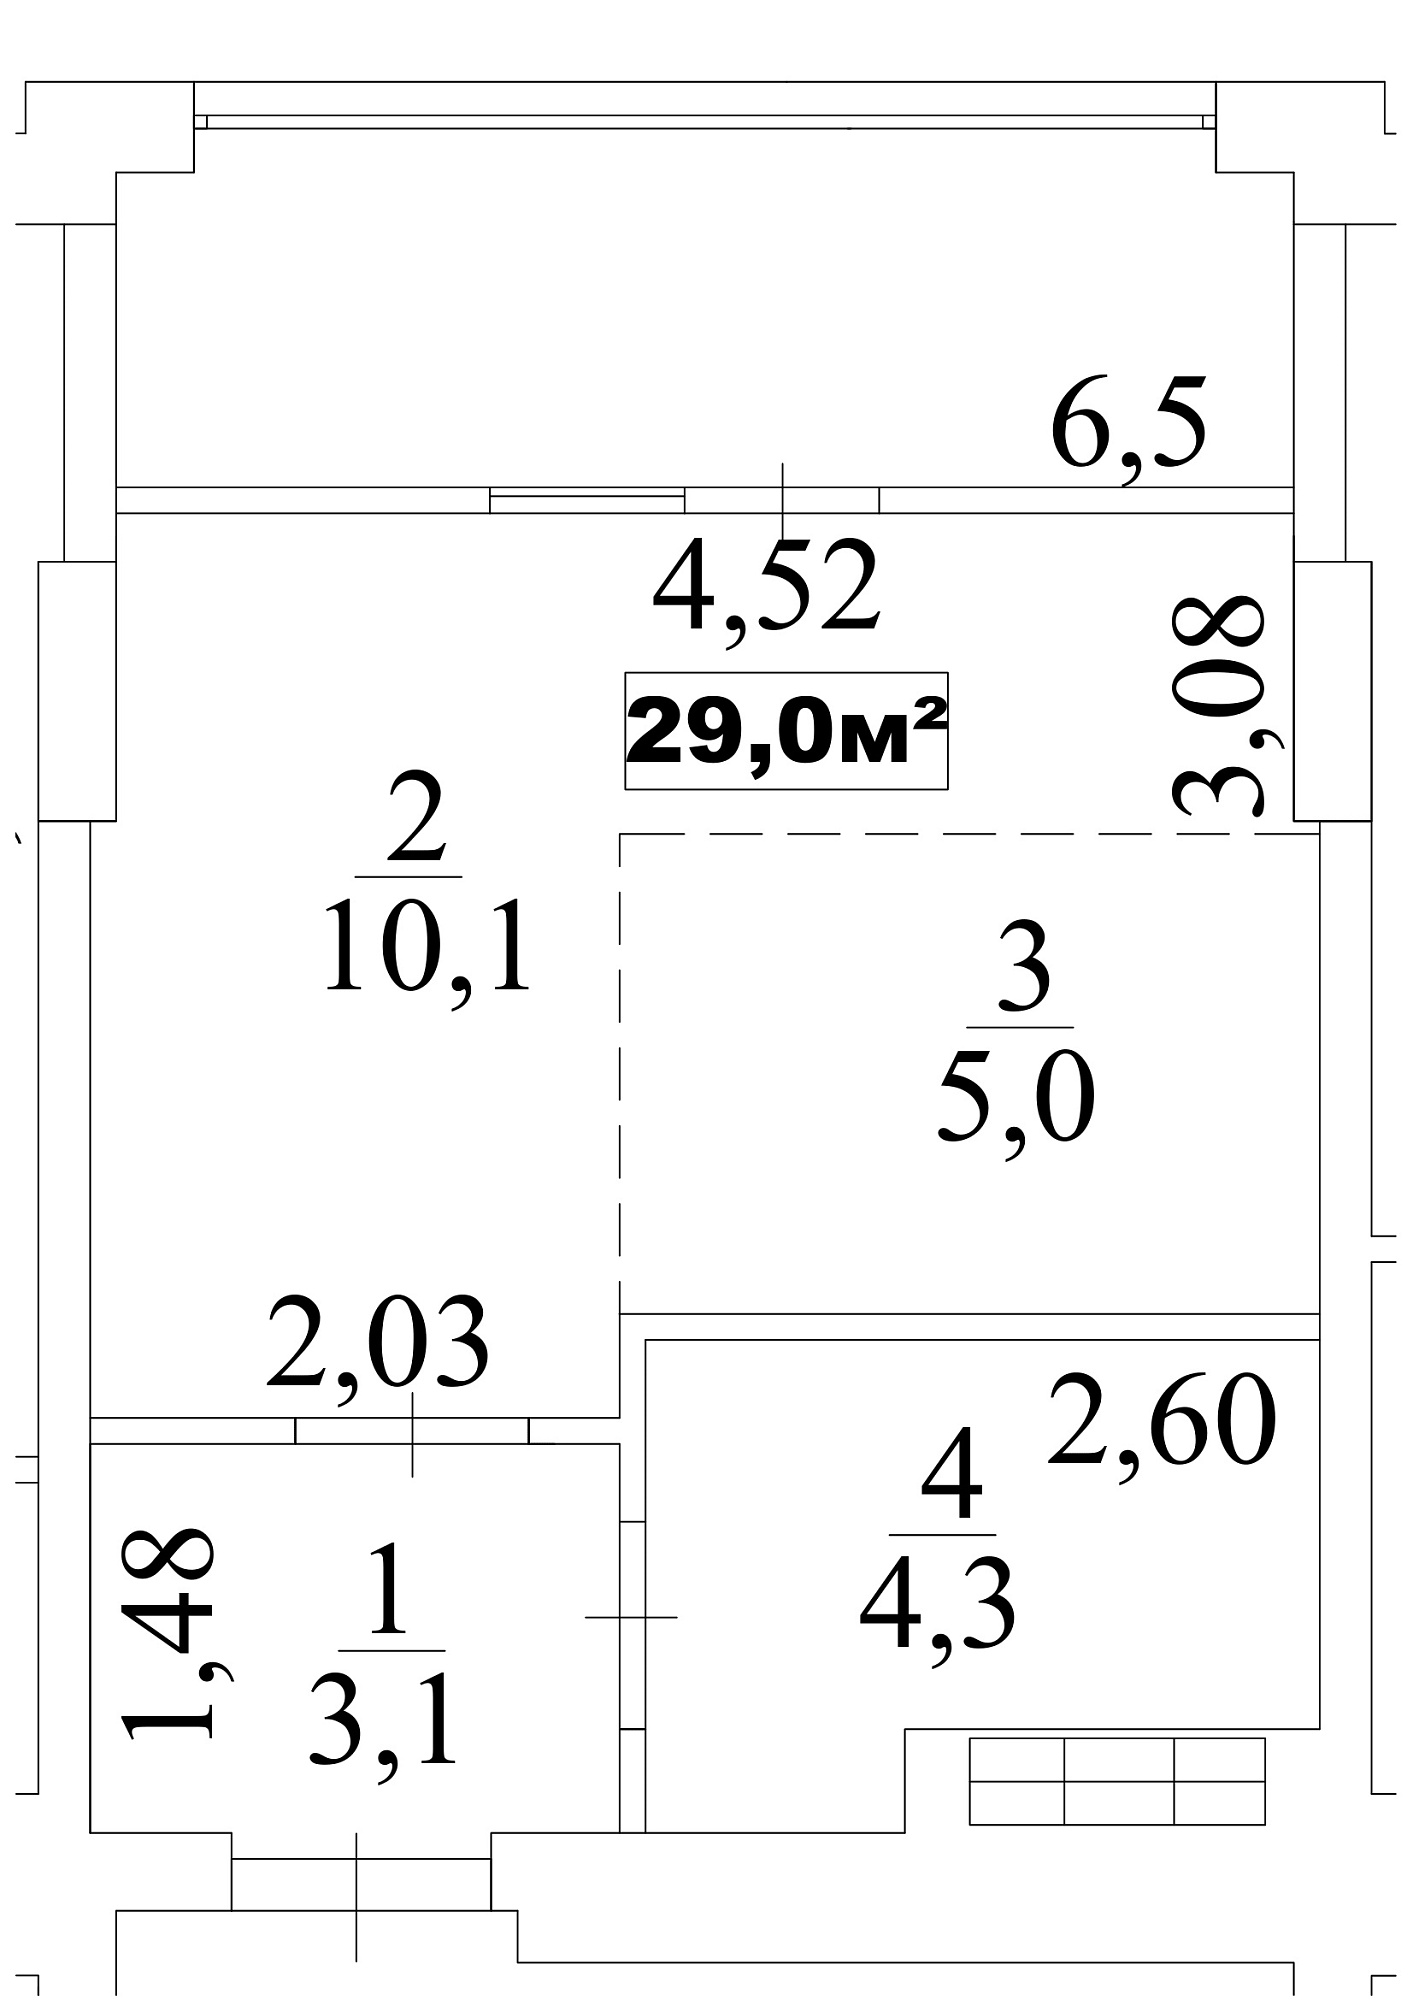 Planning Smart flats area 29m2, AB-10-06/00050.